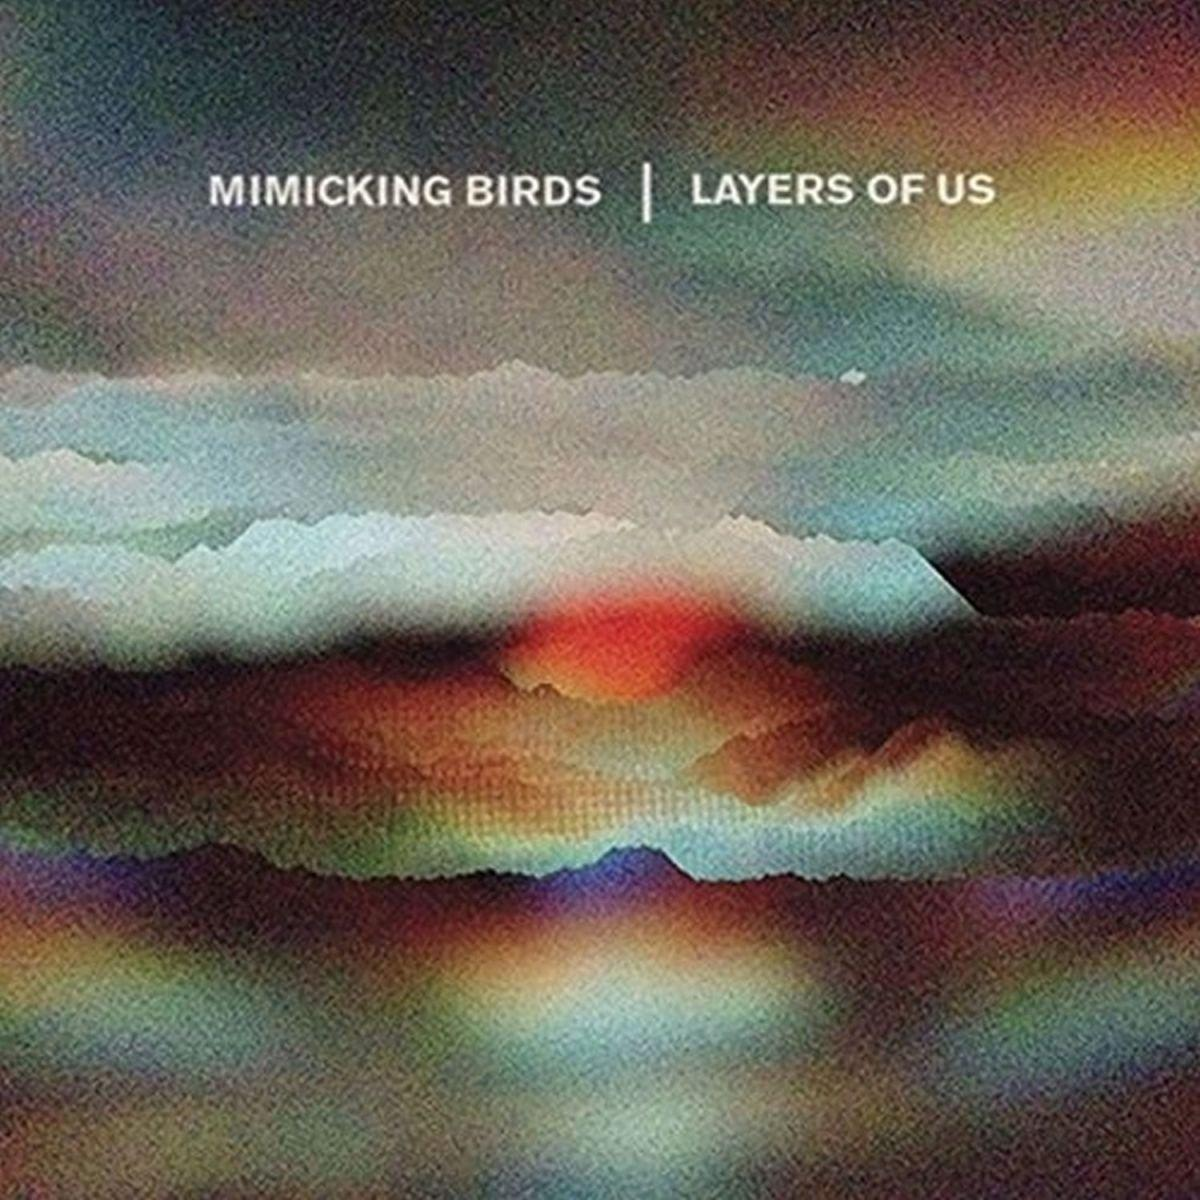 Layers Birds Us (CD) - Mimicking - Of